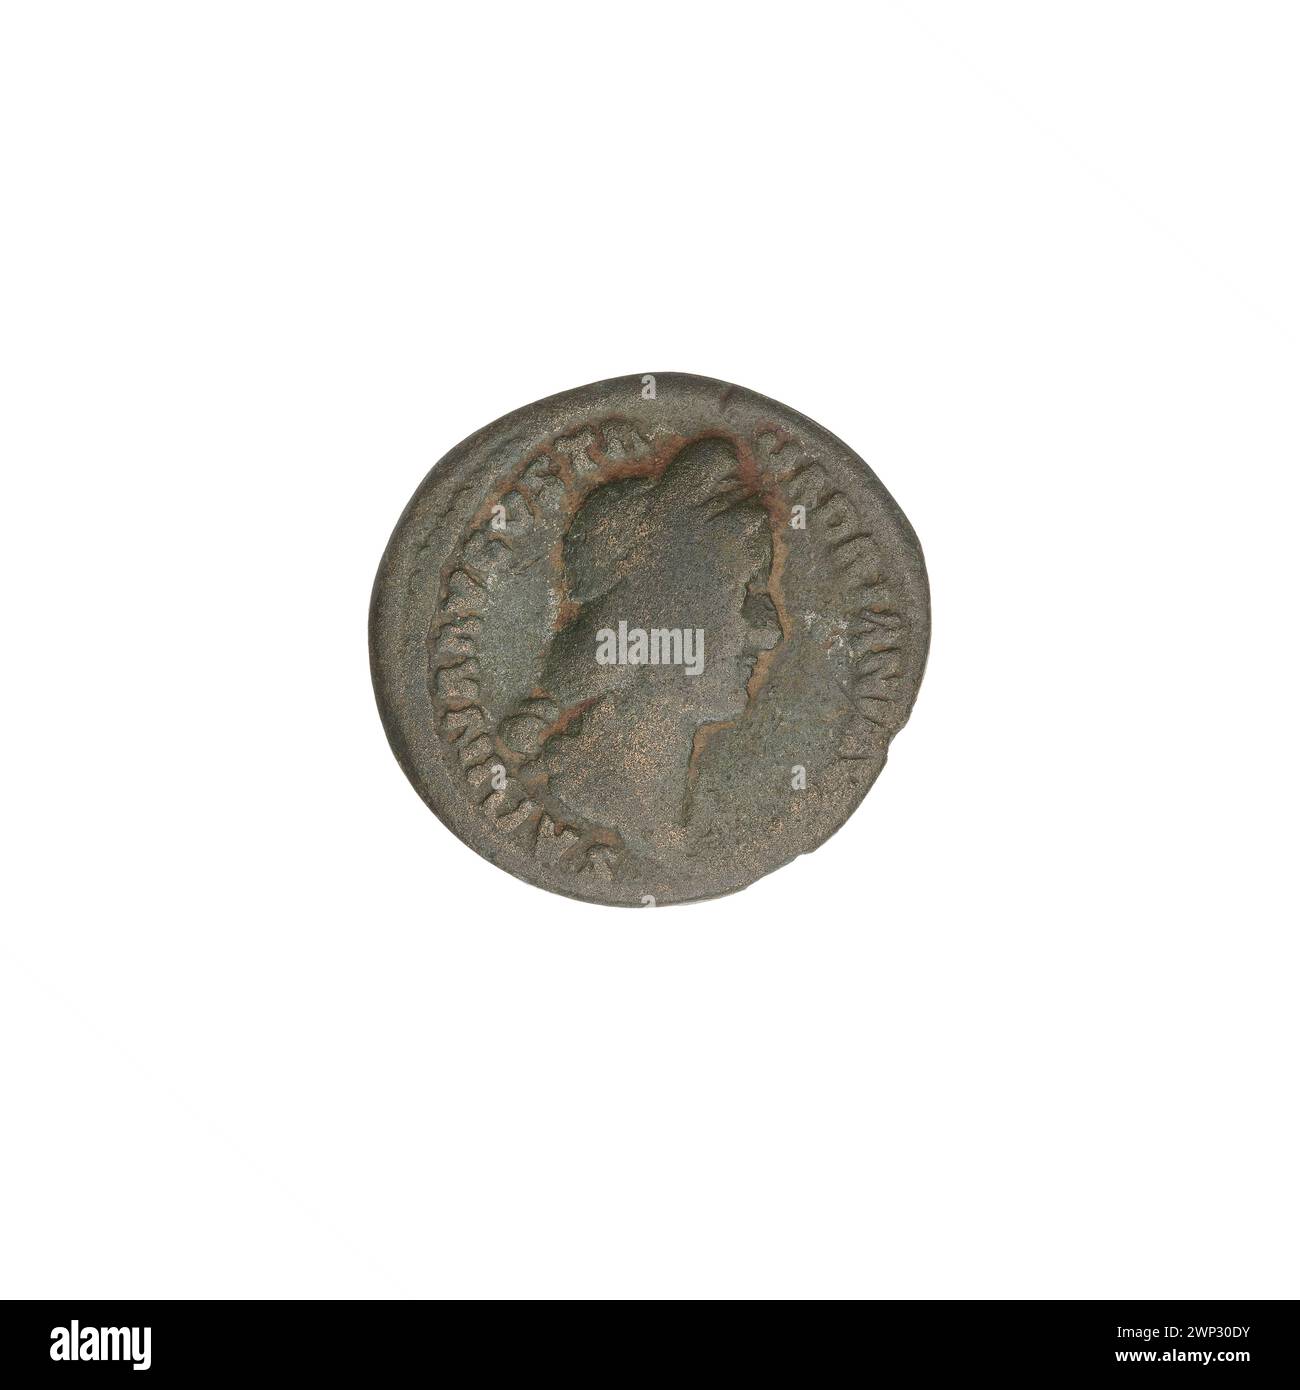 denarius; Hadrian (76-138; Roman emperor 117-138), Sabina (83-137; Roman Empress 117-137); 128-134 (128-00-00-134-00-00);Pudicitia (Personification), busts, veils Stock Photo